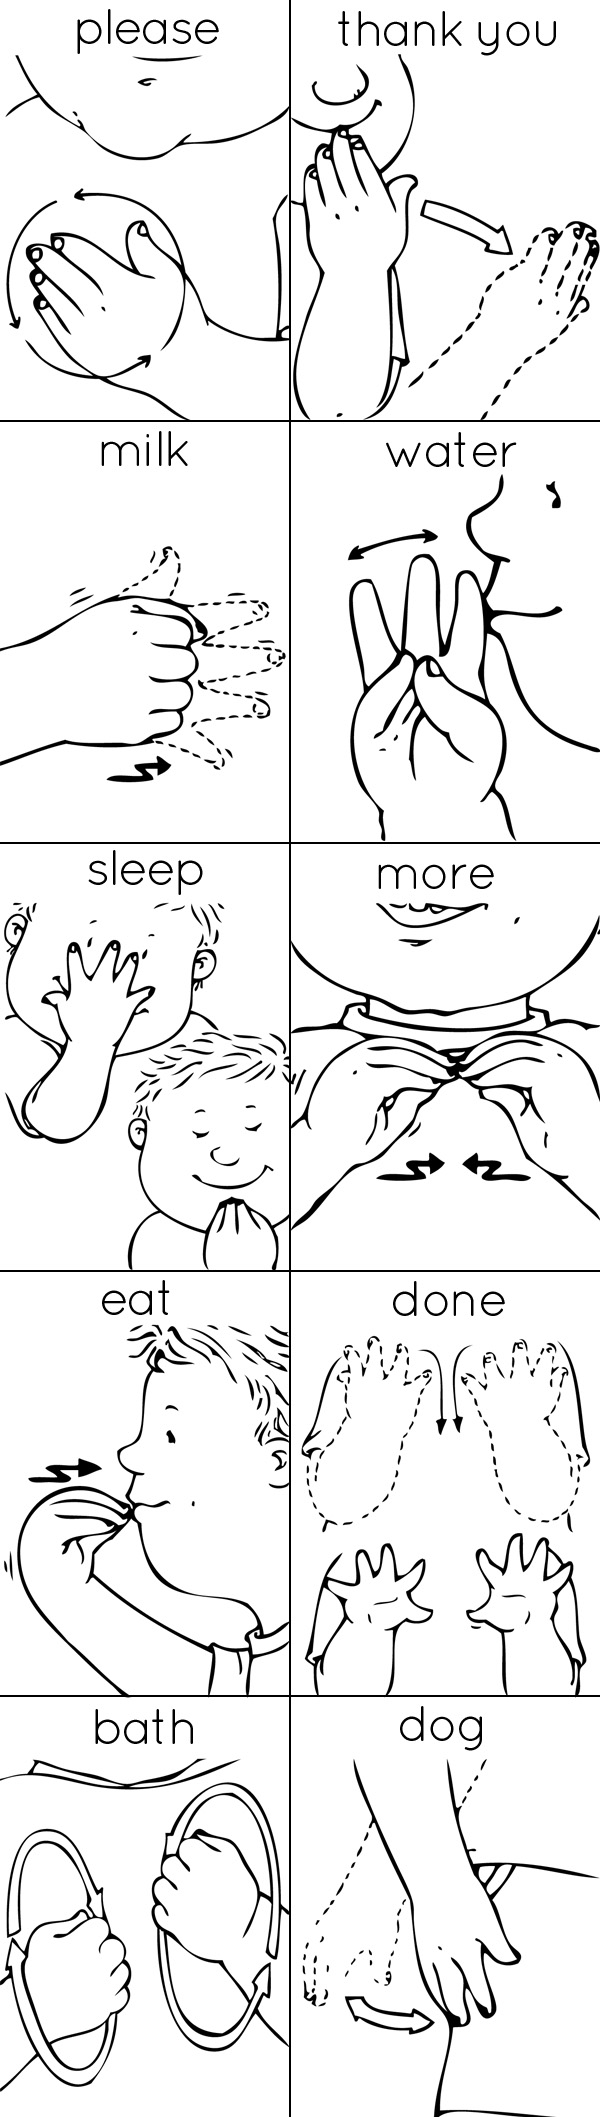 Communicating with Baby: Baby Sign Language | PepperDesignBlog.com